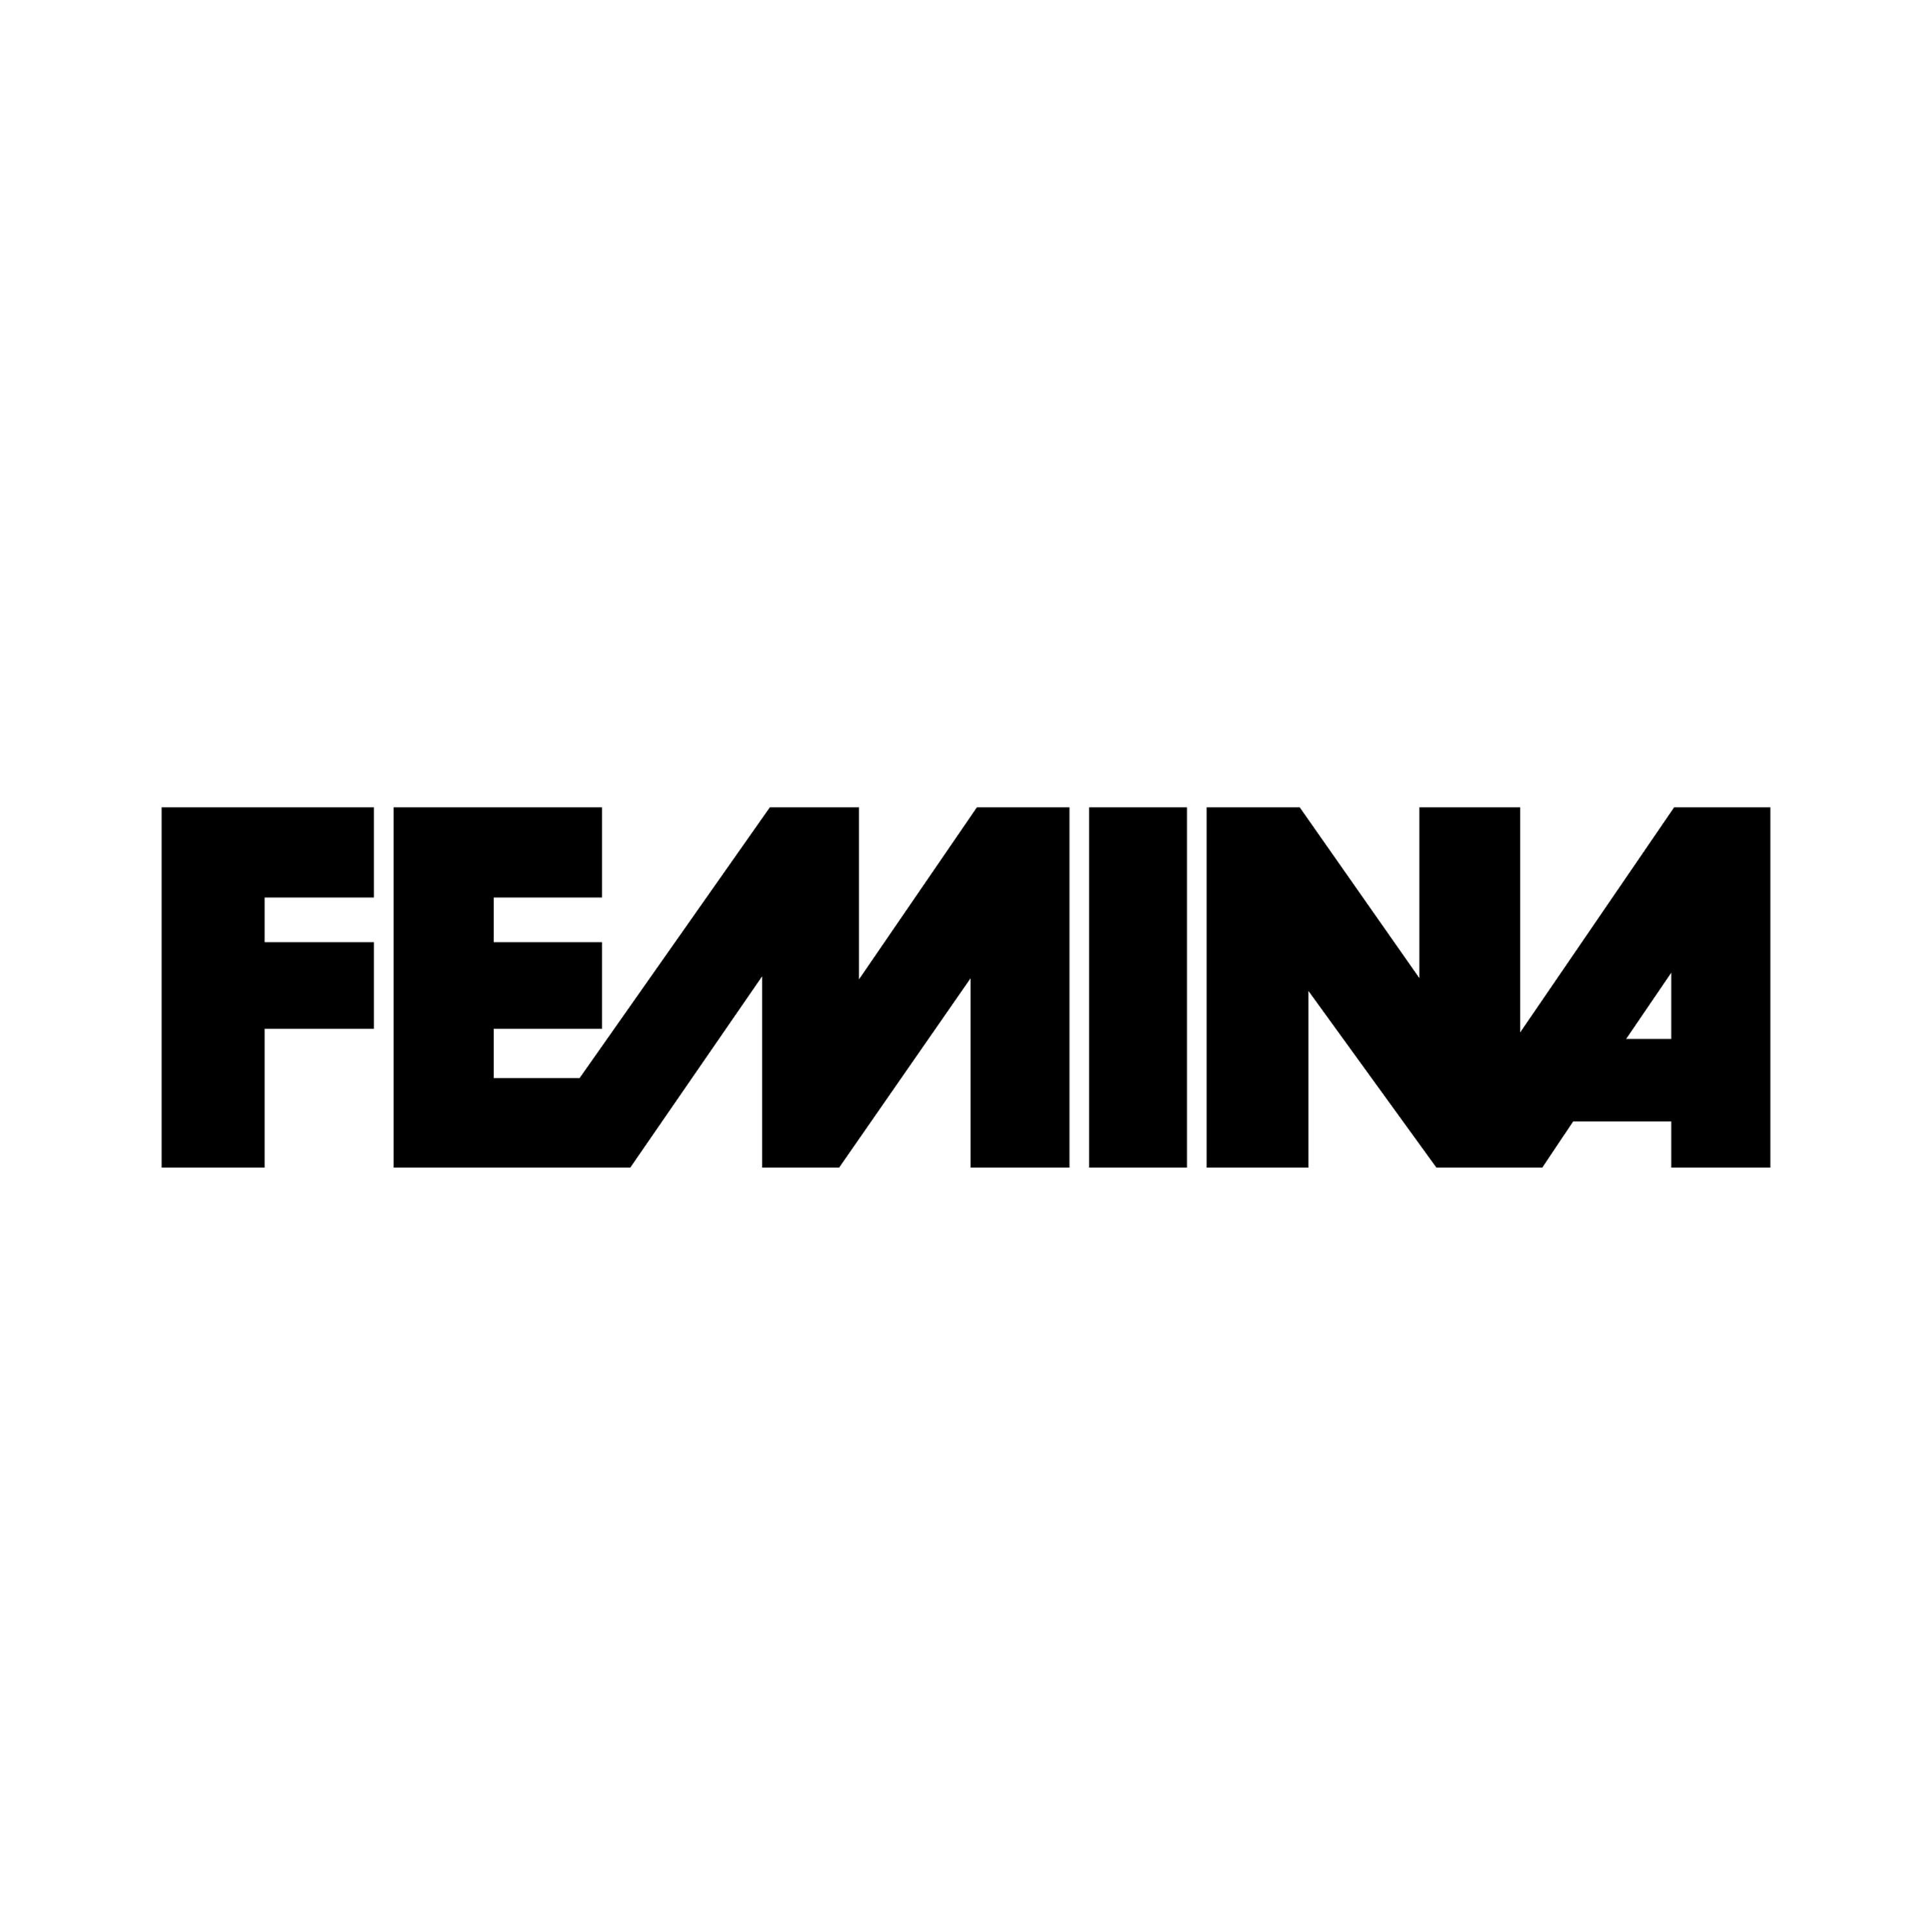 a black and white logo for femina magazine on a white background